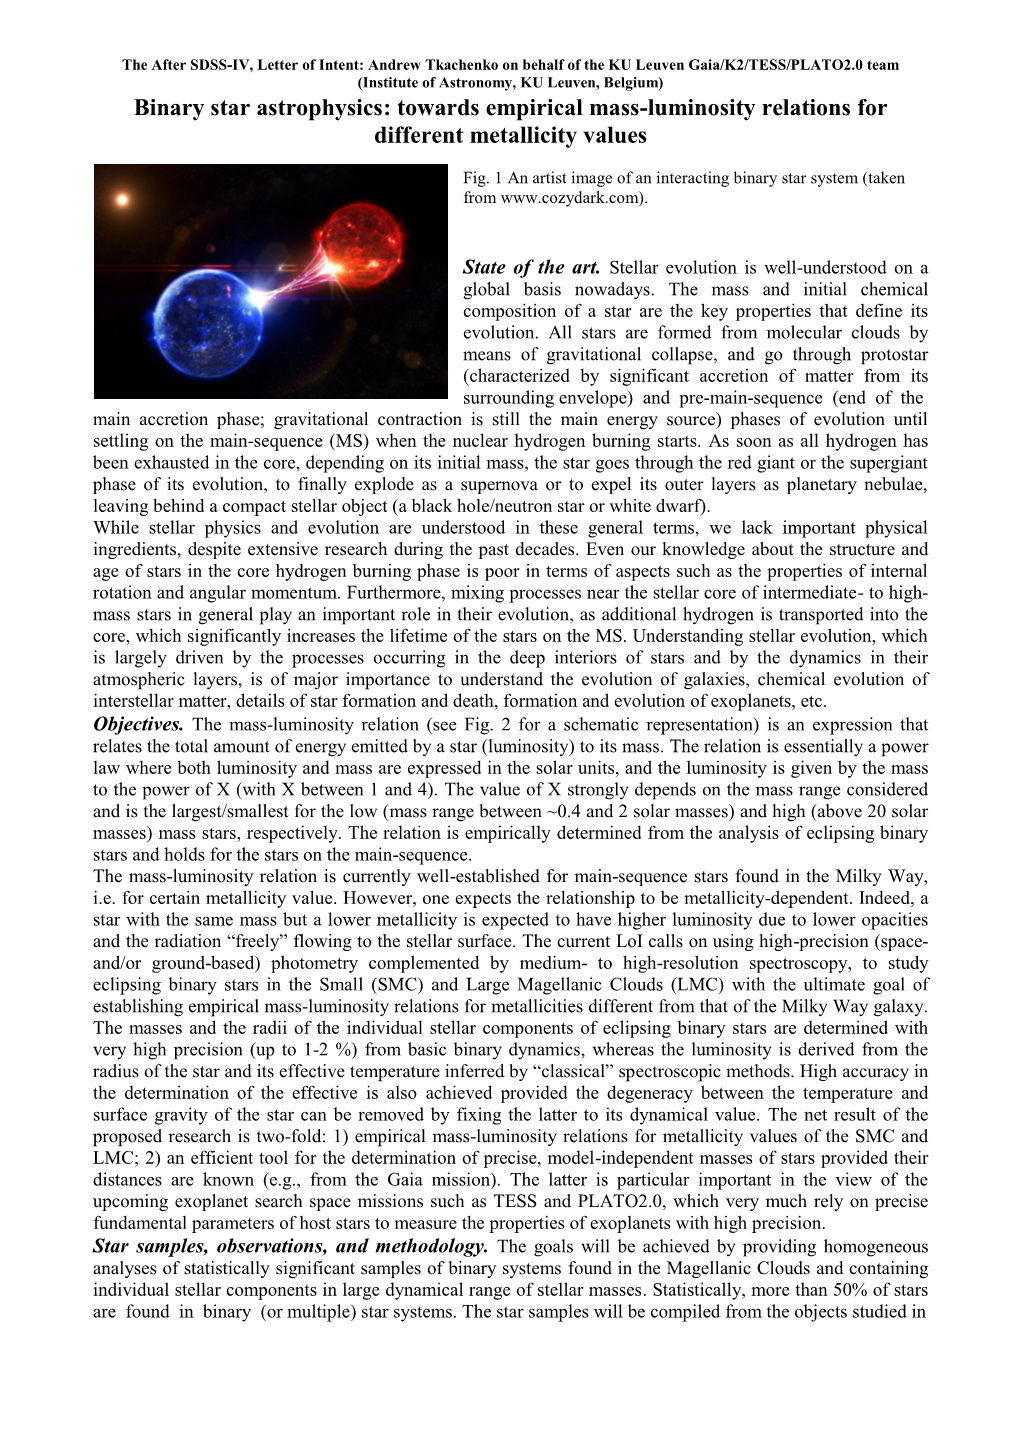 Binary Star Astrophysics: Towards Empirical Mass-Luminosity Relations for Different Metallicity Values